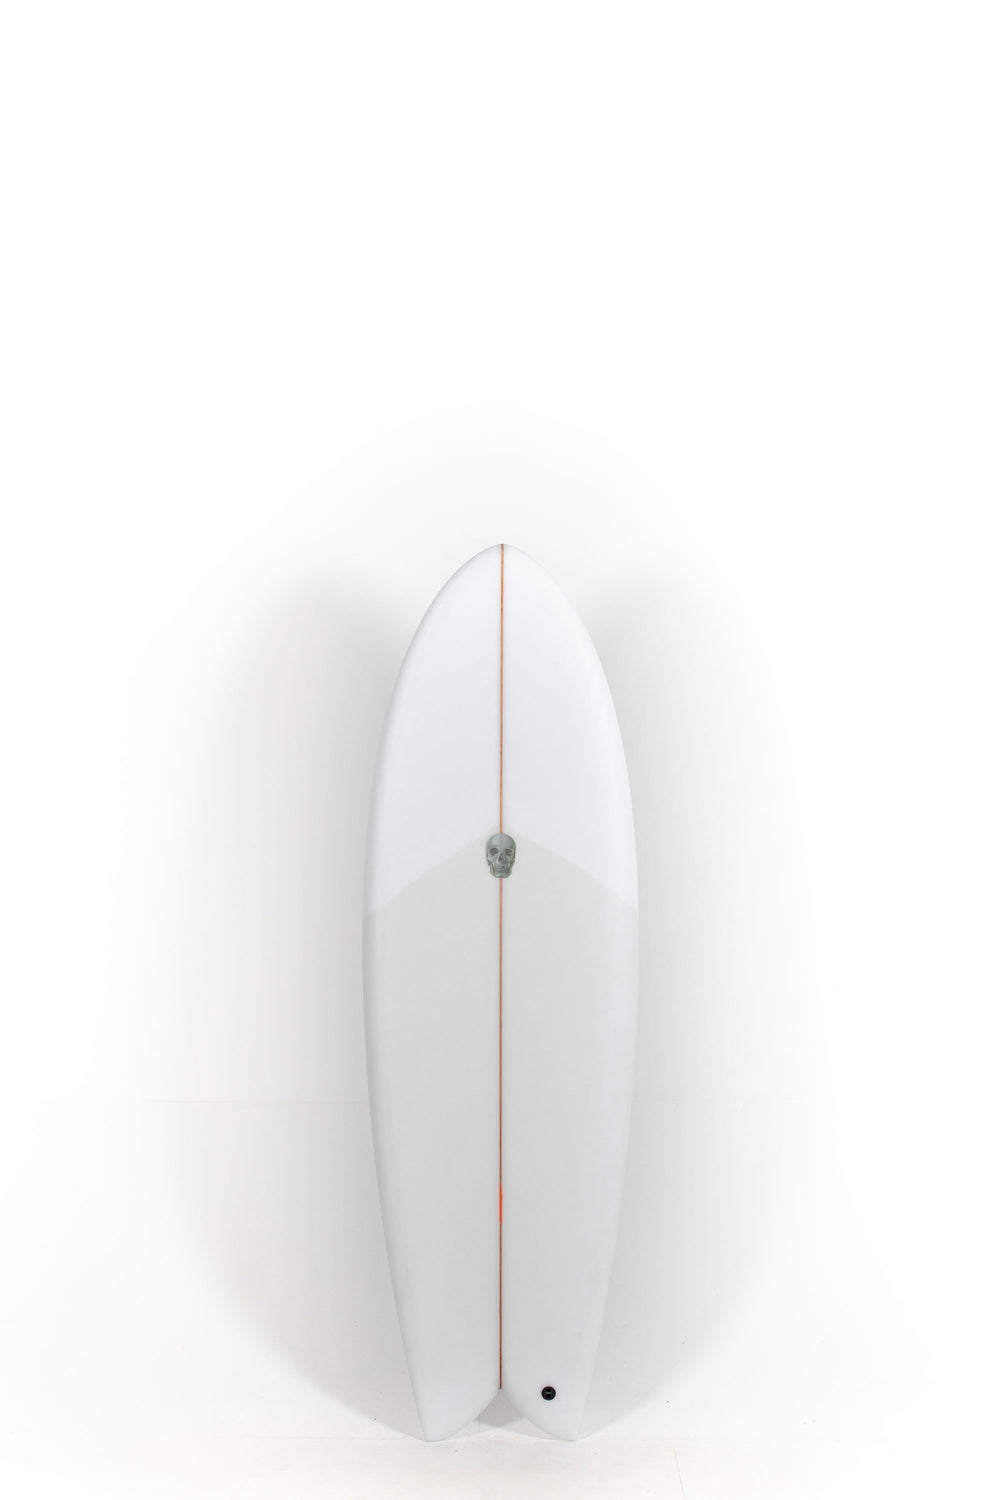 Pukas Surf Shop - Christenson Surfboards - MYCONAUT - 5'7